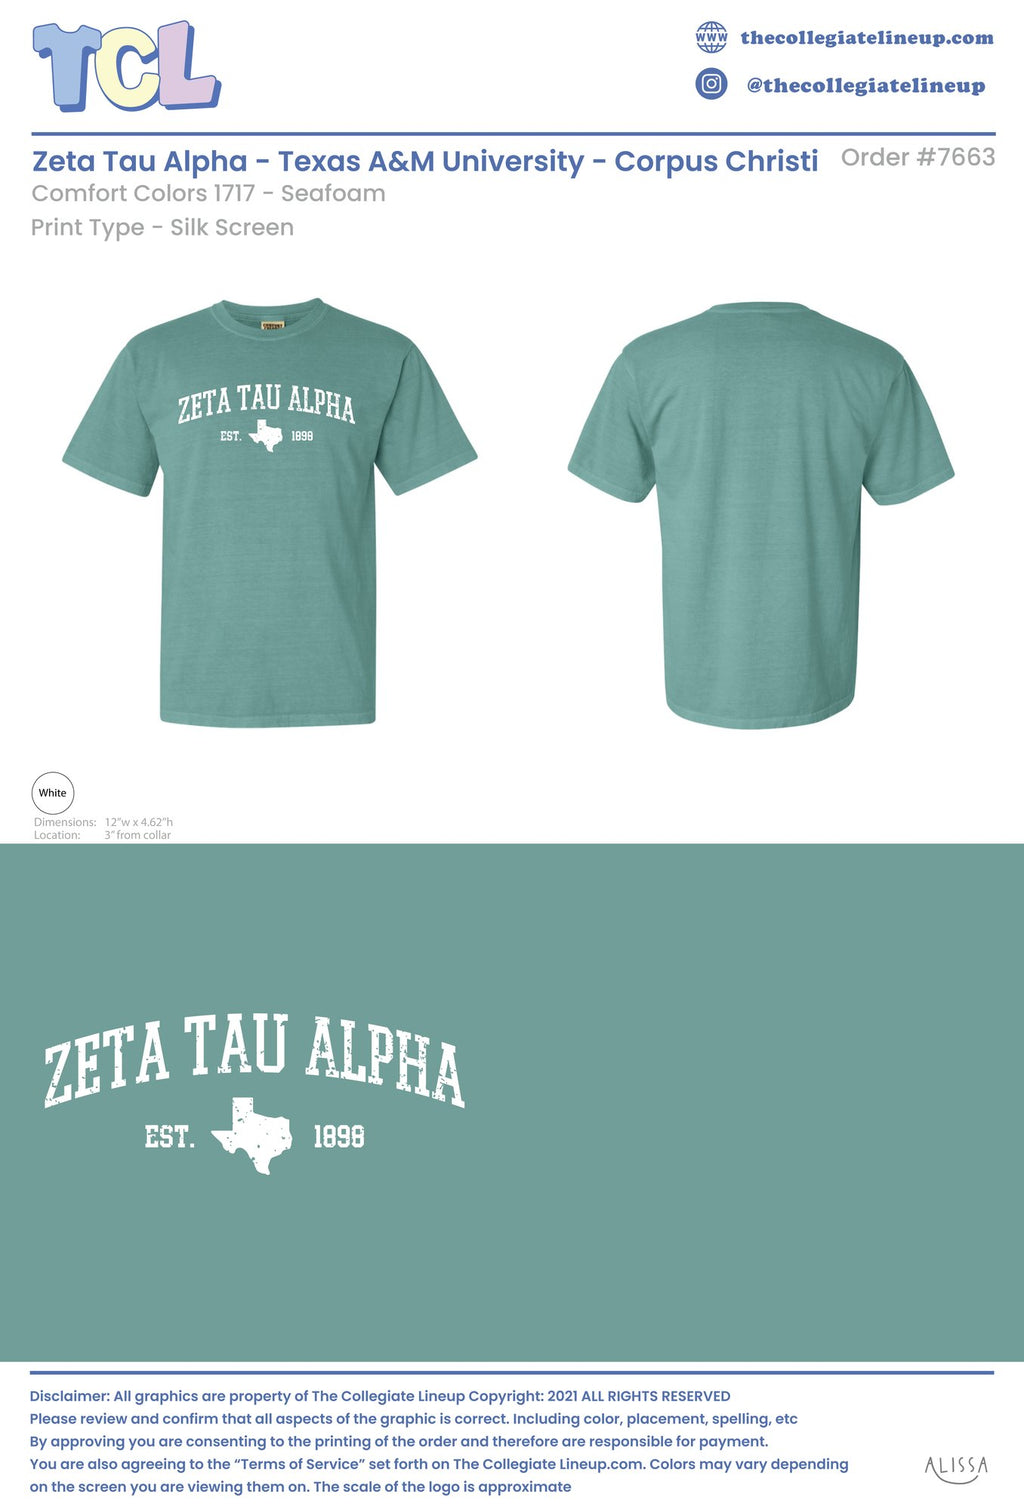 Zeta Tau Alpha Texas A&M University - Corpus Christi #7663